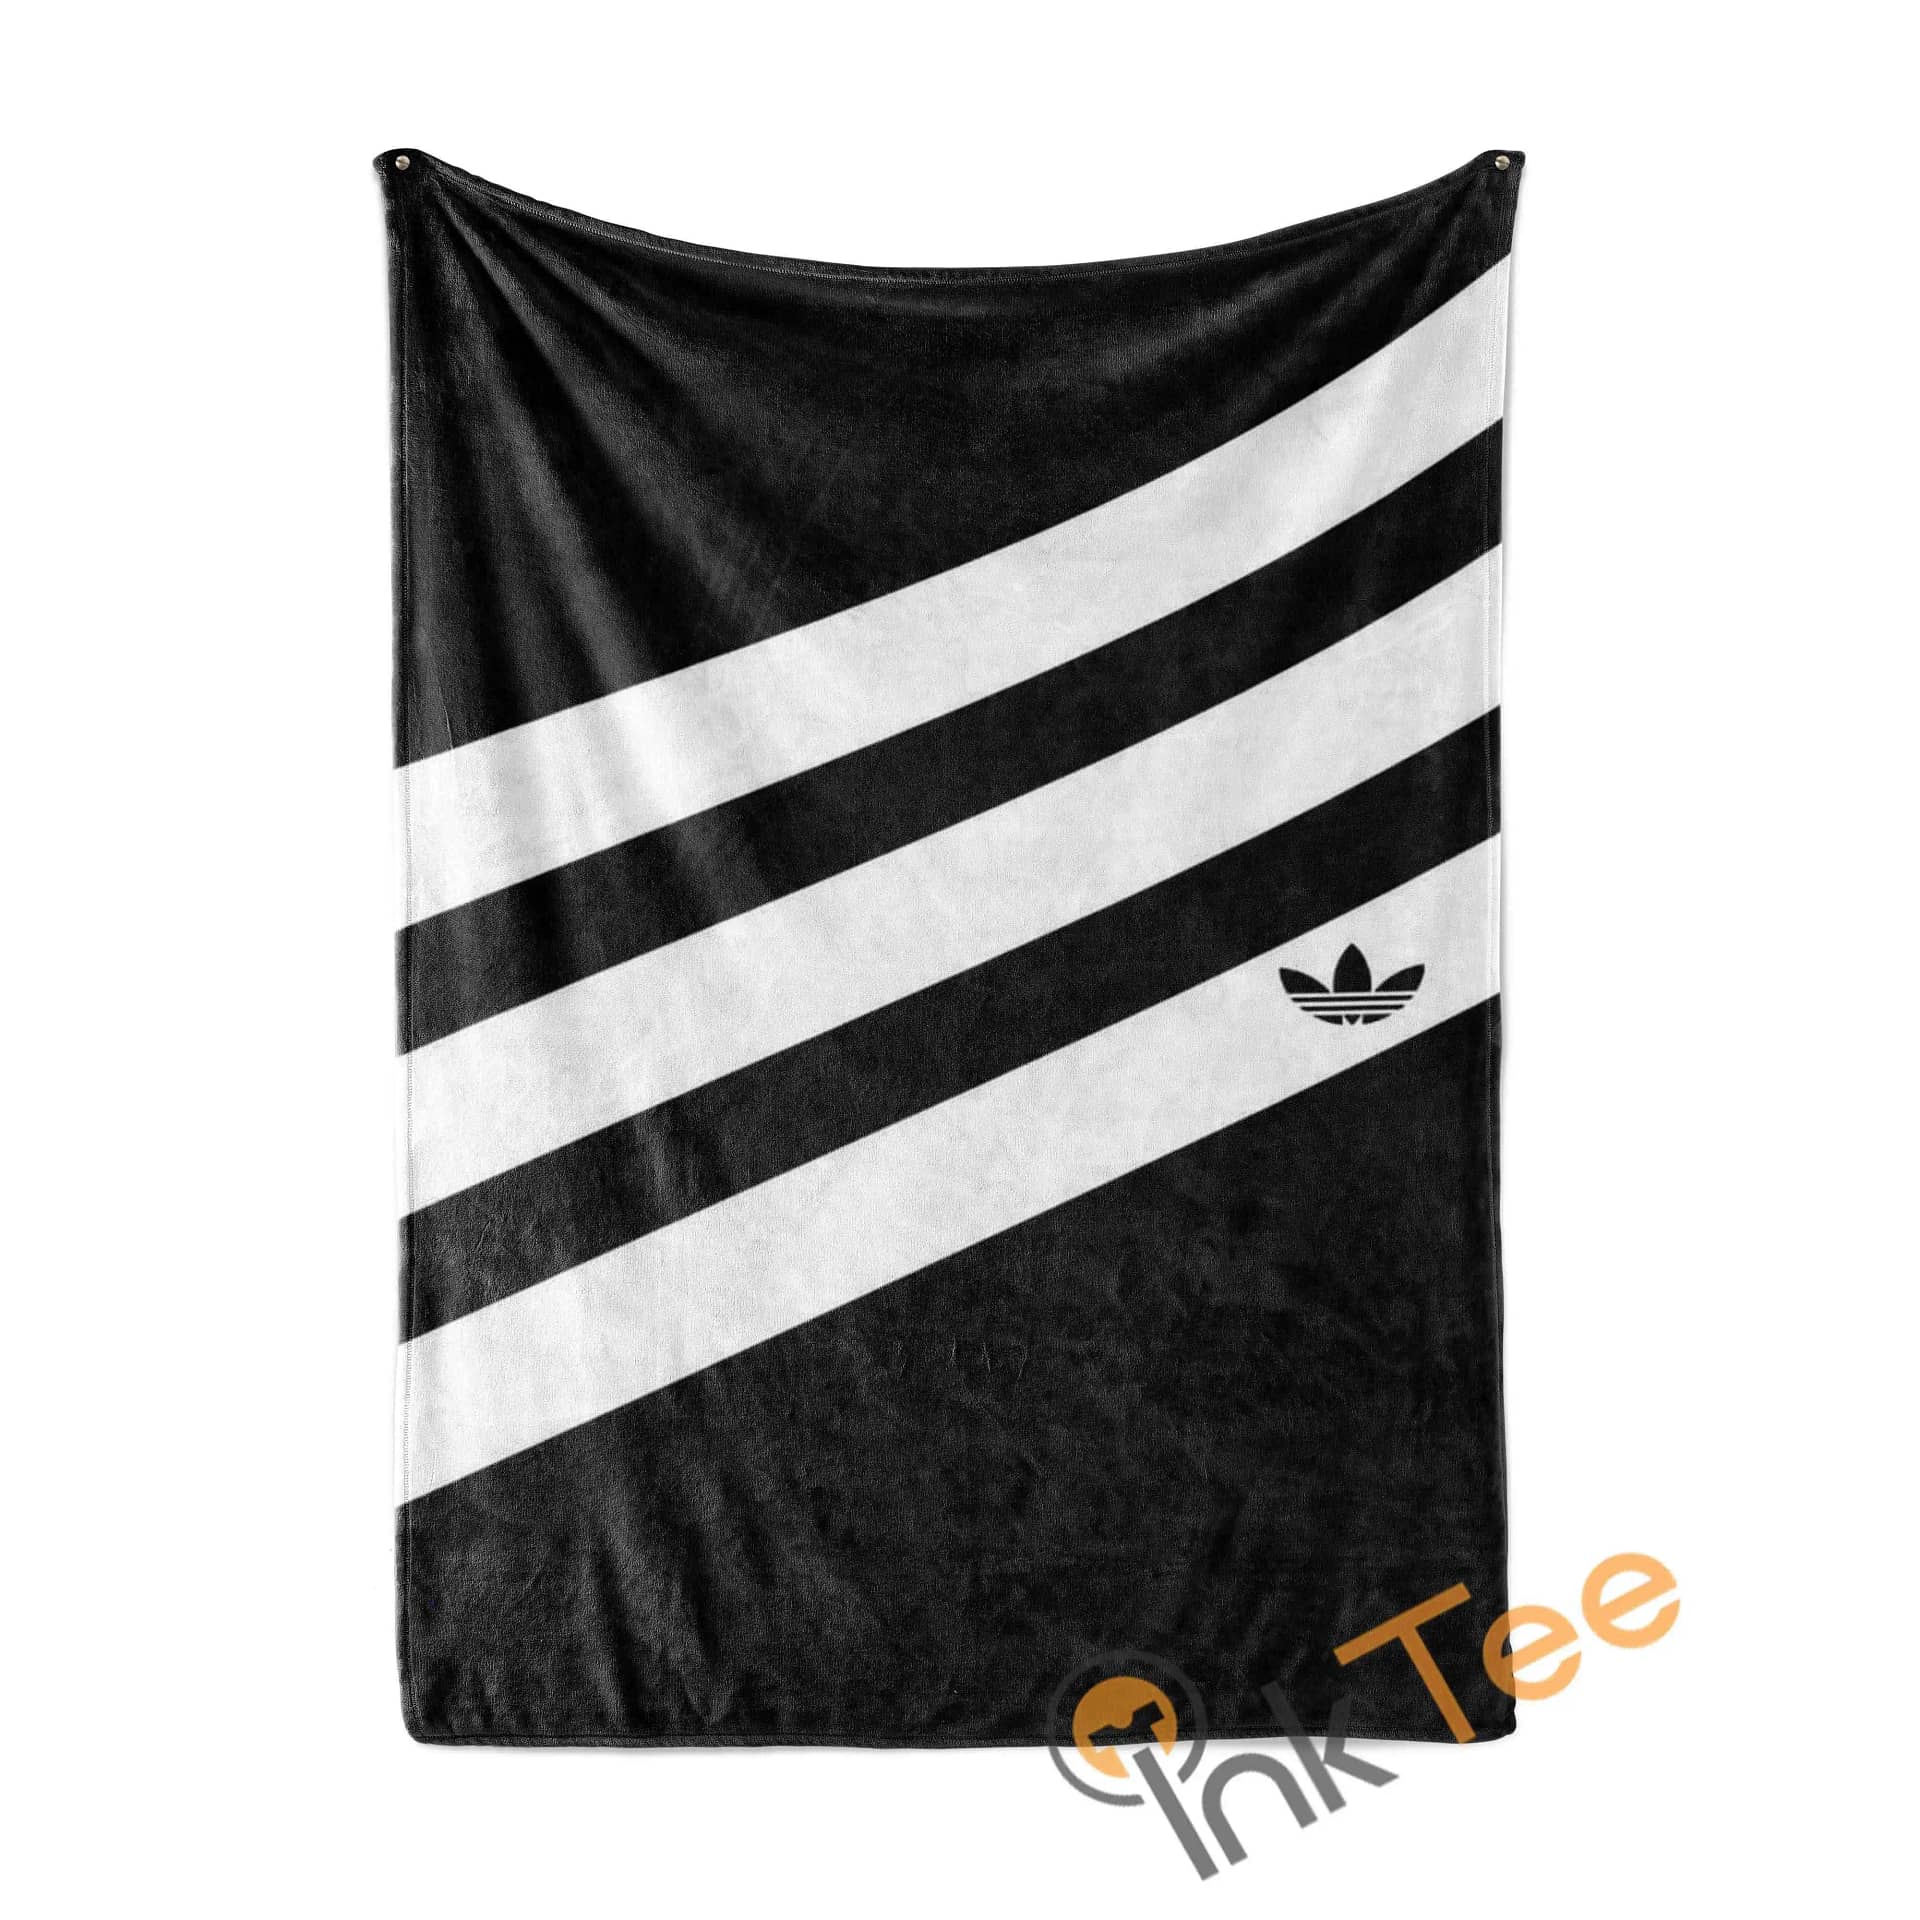 Adidas Limited Edition Amazon Best Seller Sku 4032 Fleece Blanket